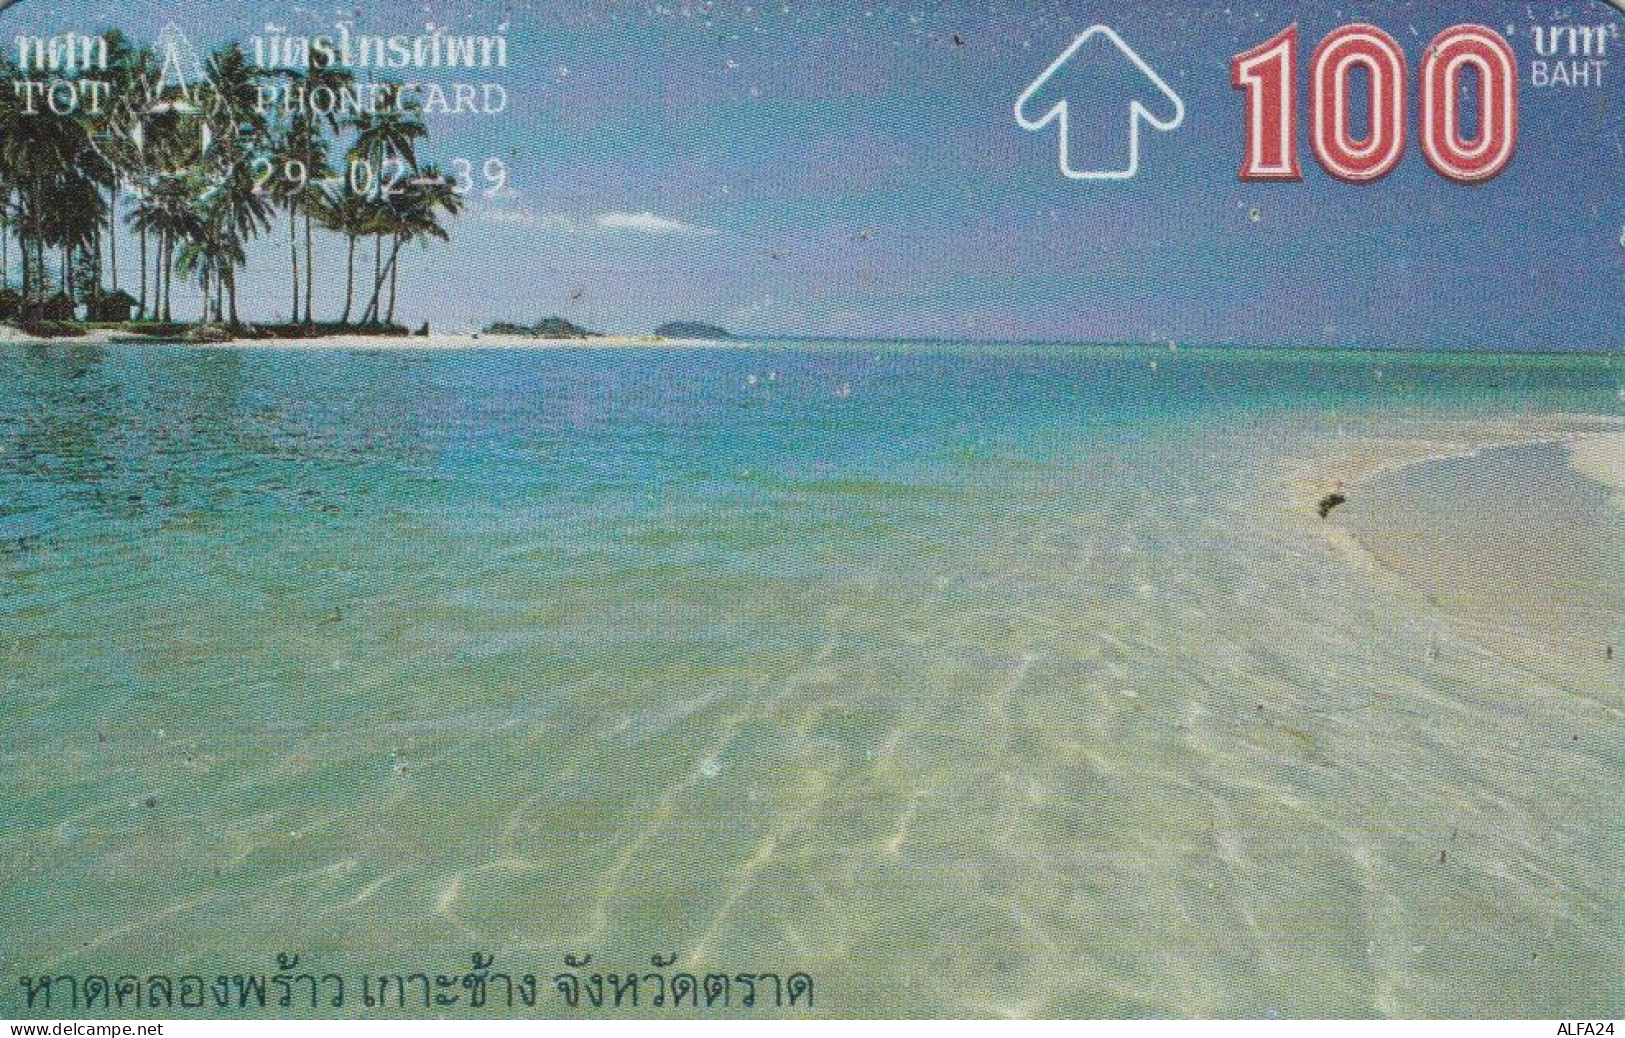 PHONE CARD TAILANDIA  (E108.10.1 - Thaïland